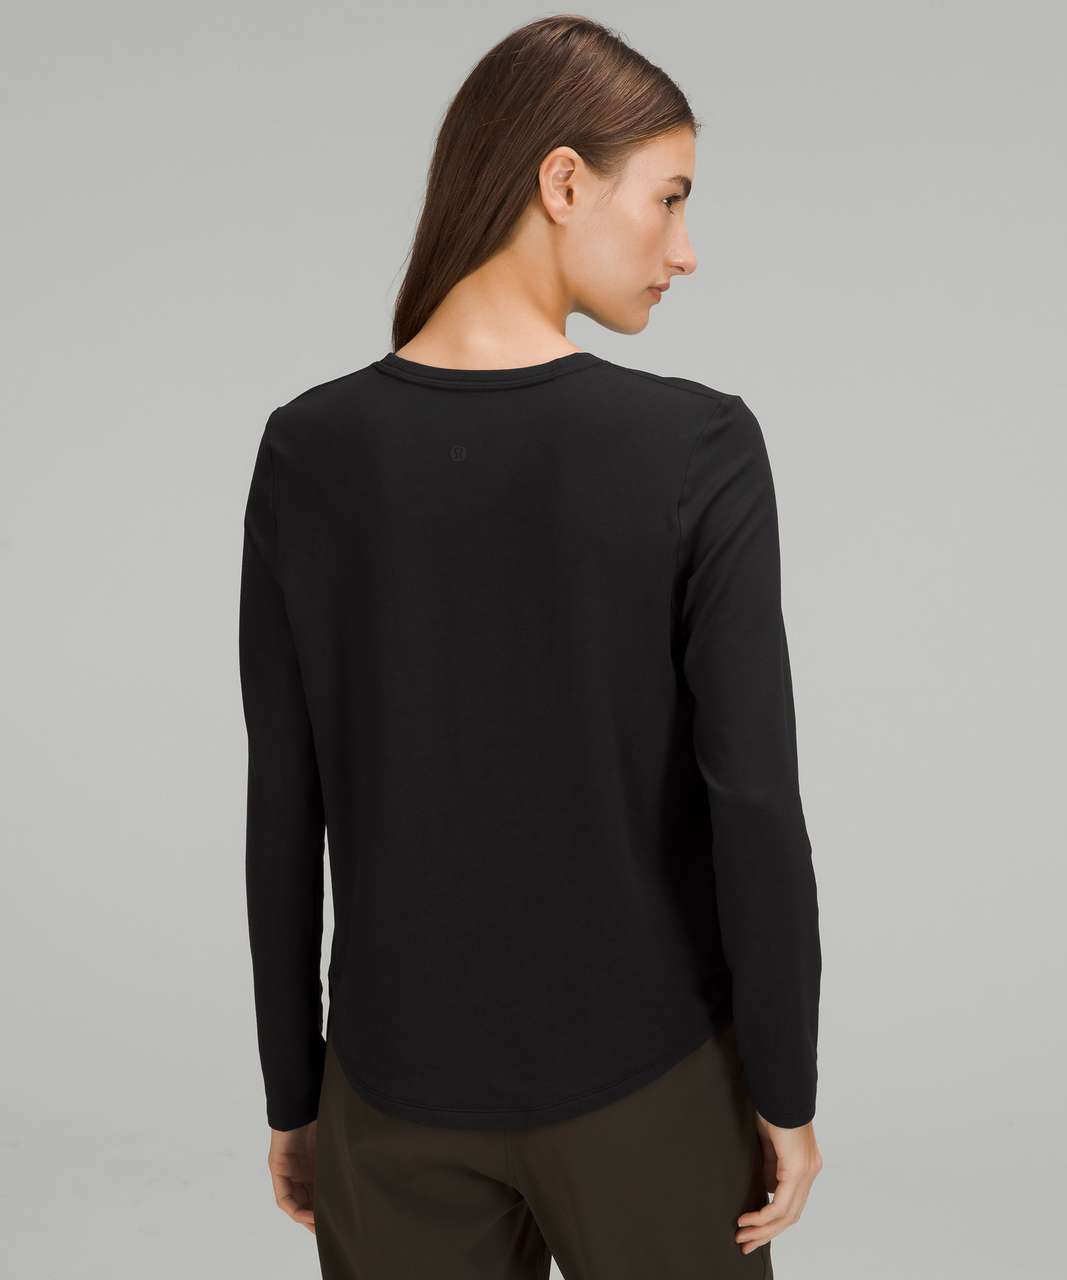 Lululemon Love Modal Fleece Long Sleeve Shirt - Black